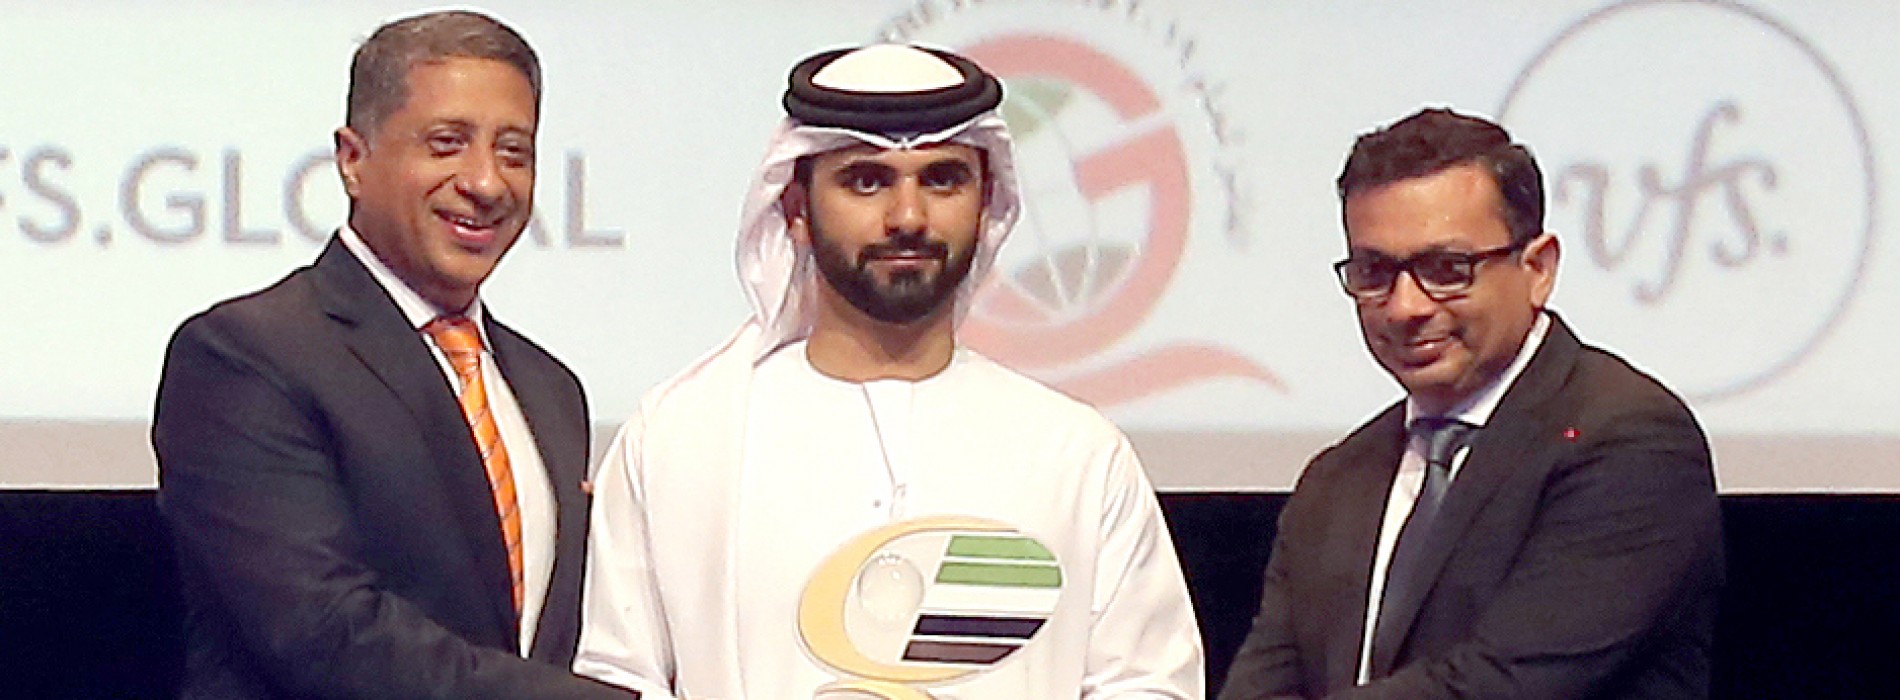 VFS Global wins the coveted Dubai Quality Global Award (DQGA)